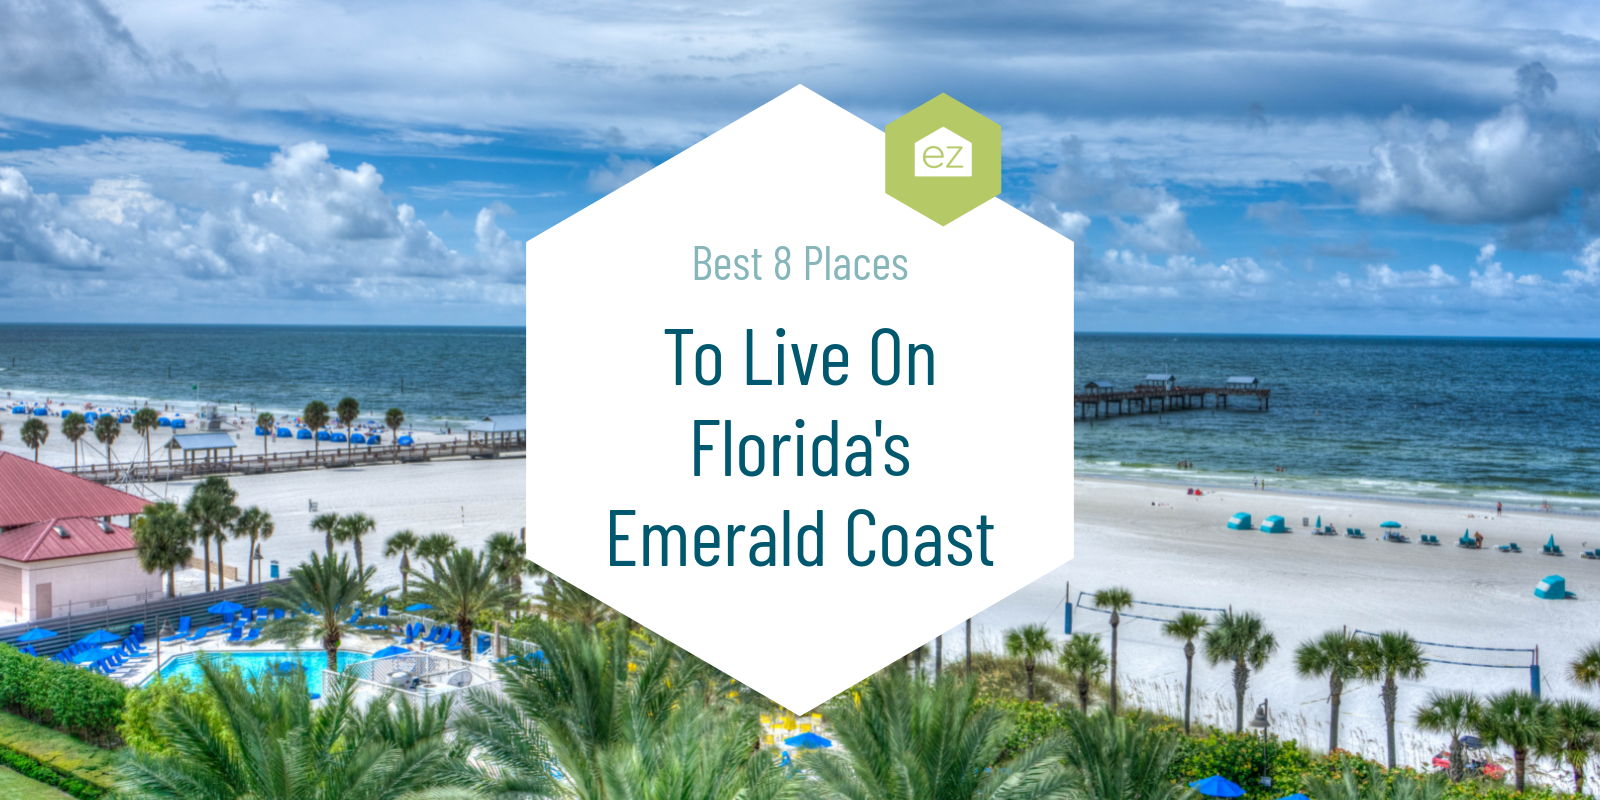 Florida's Emerald Coast